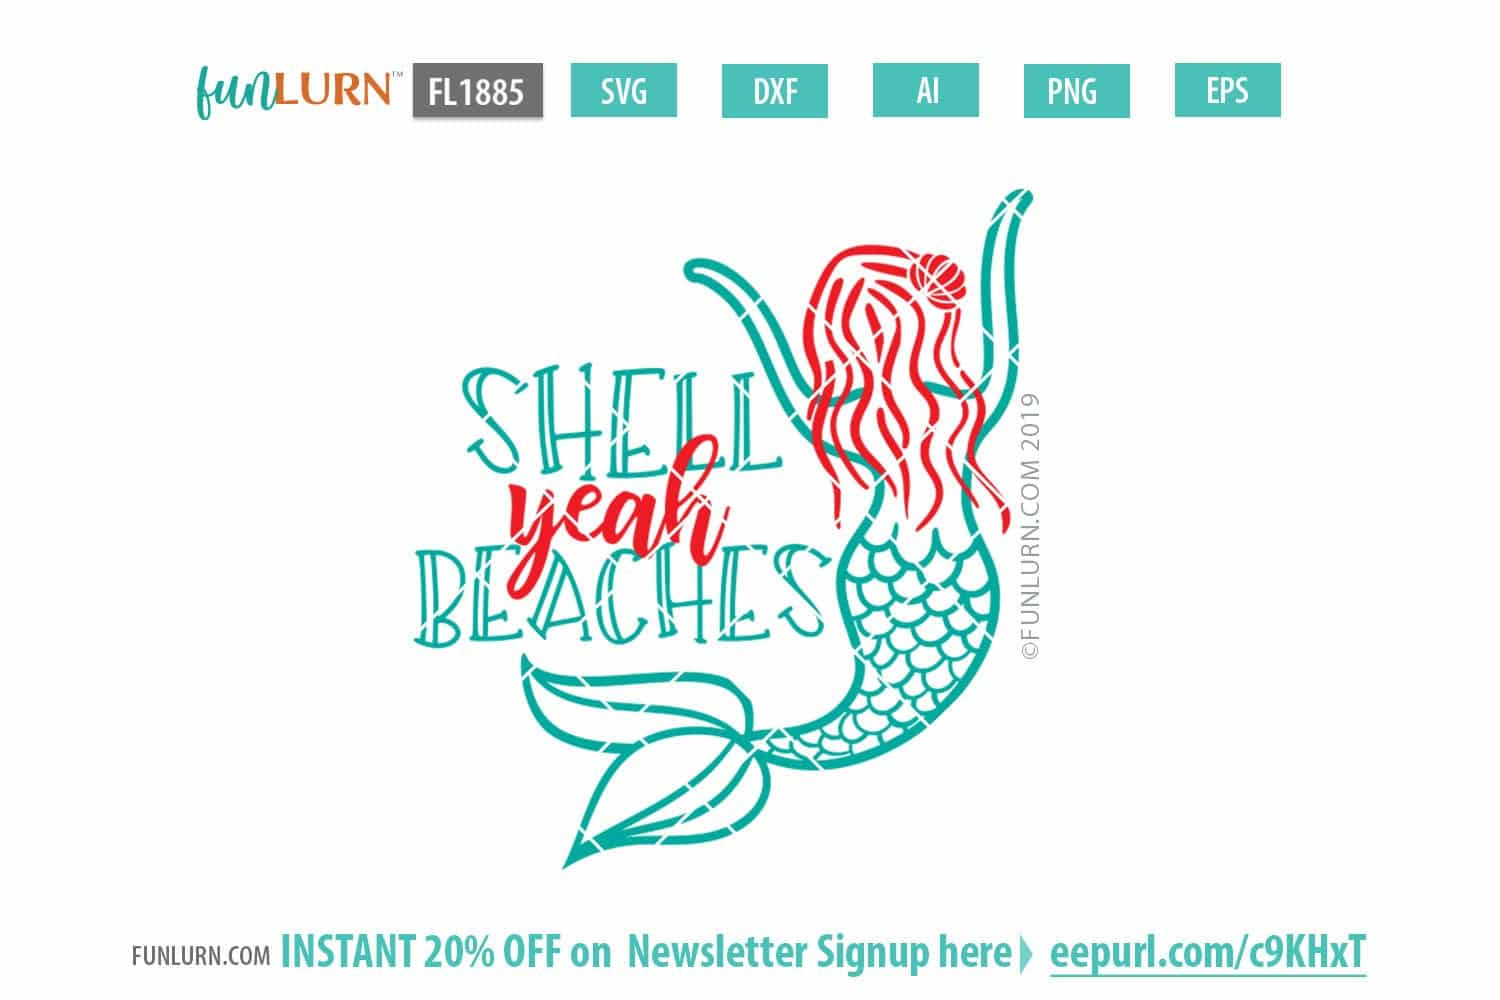 Download Shell Yeah Beaches - FunLurn